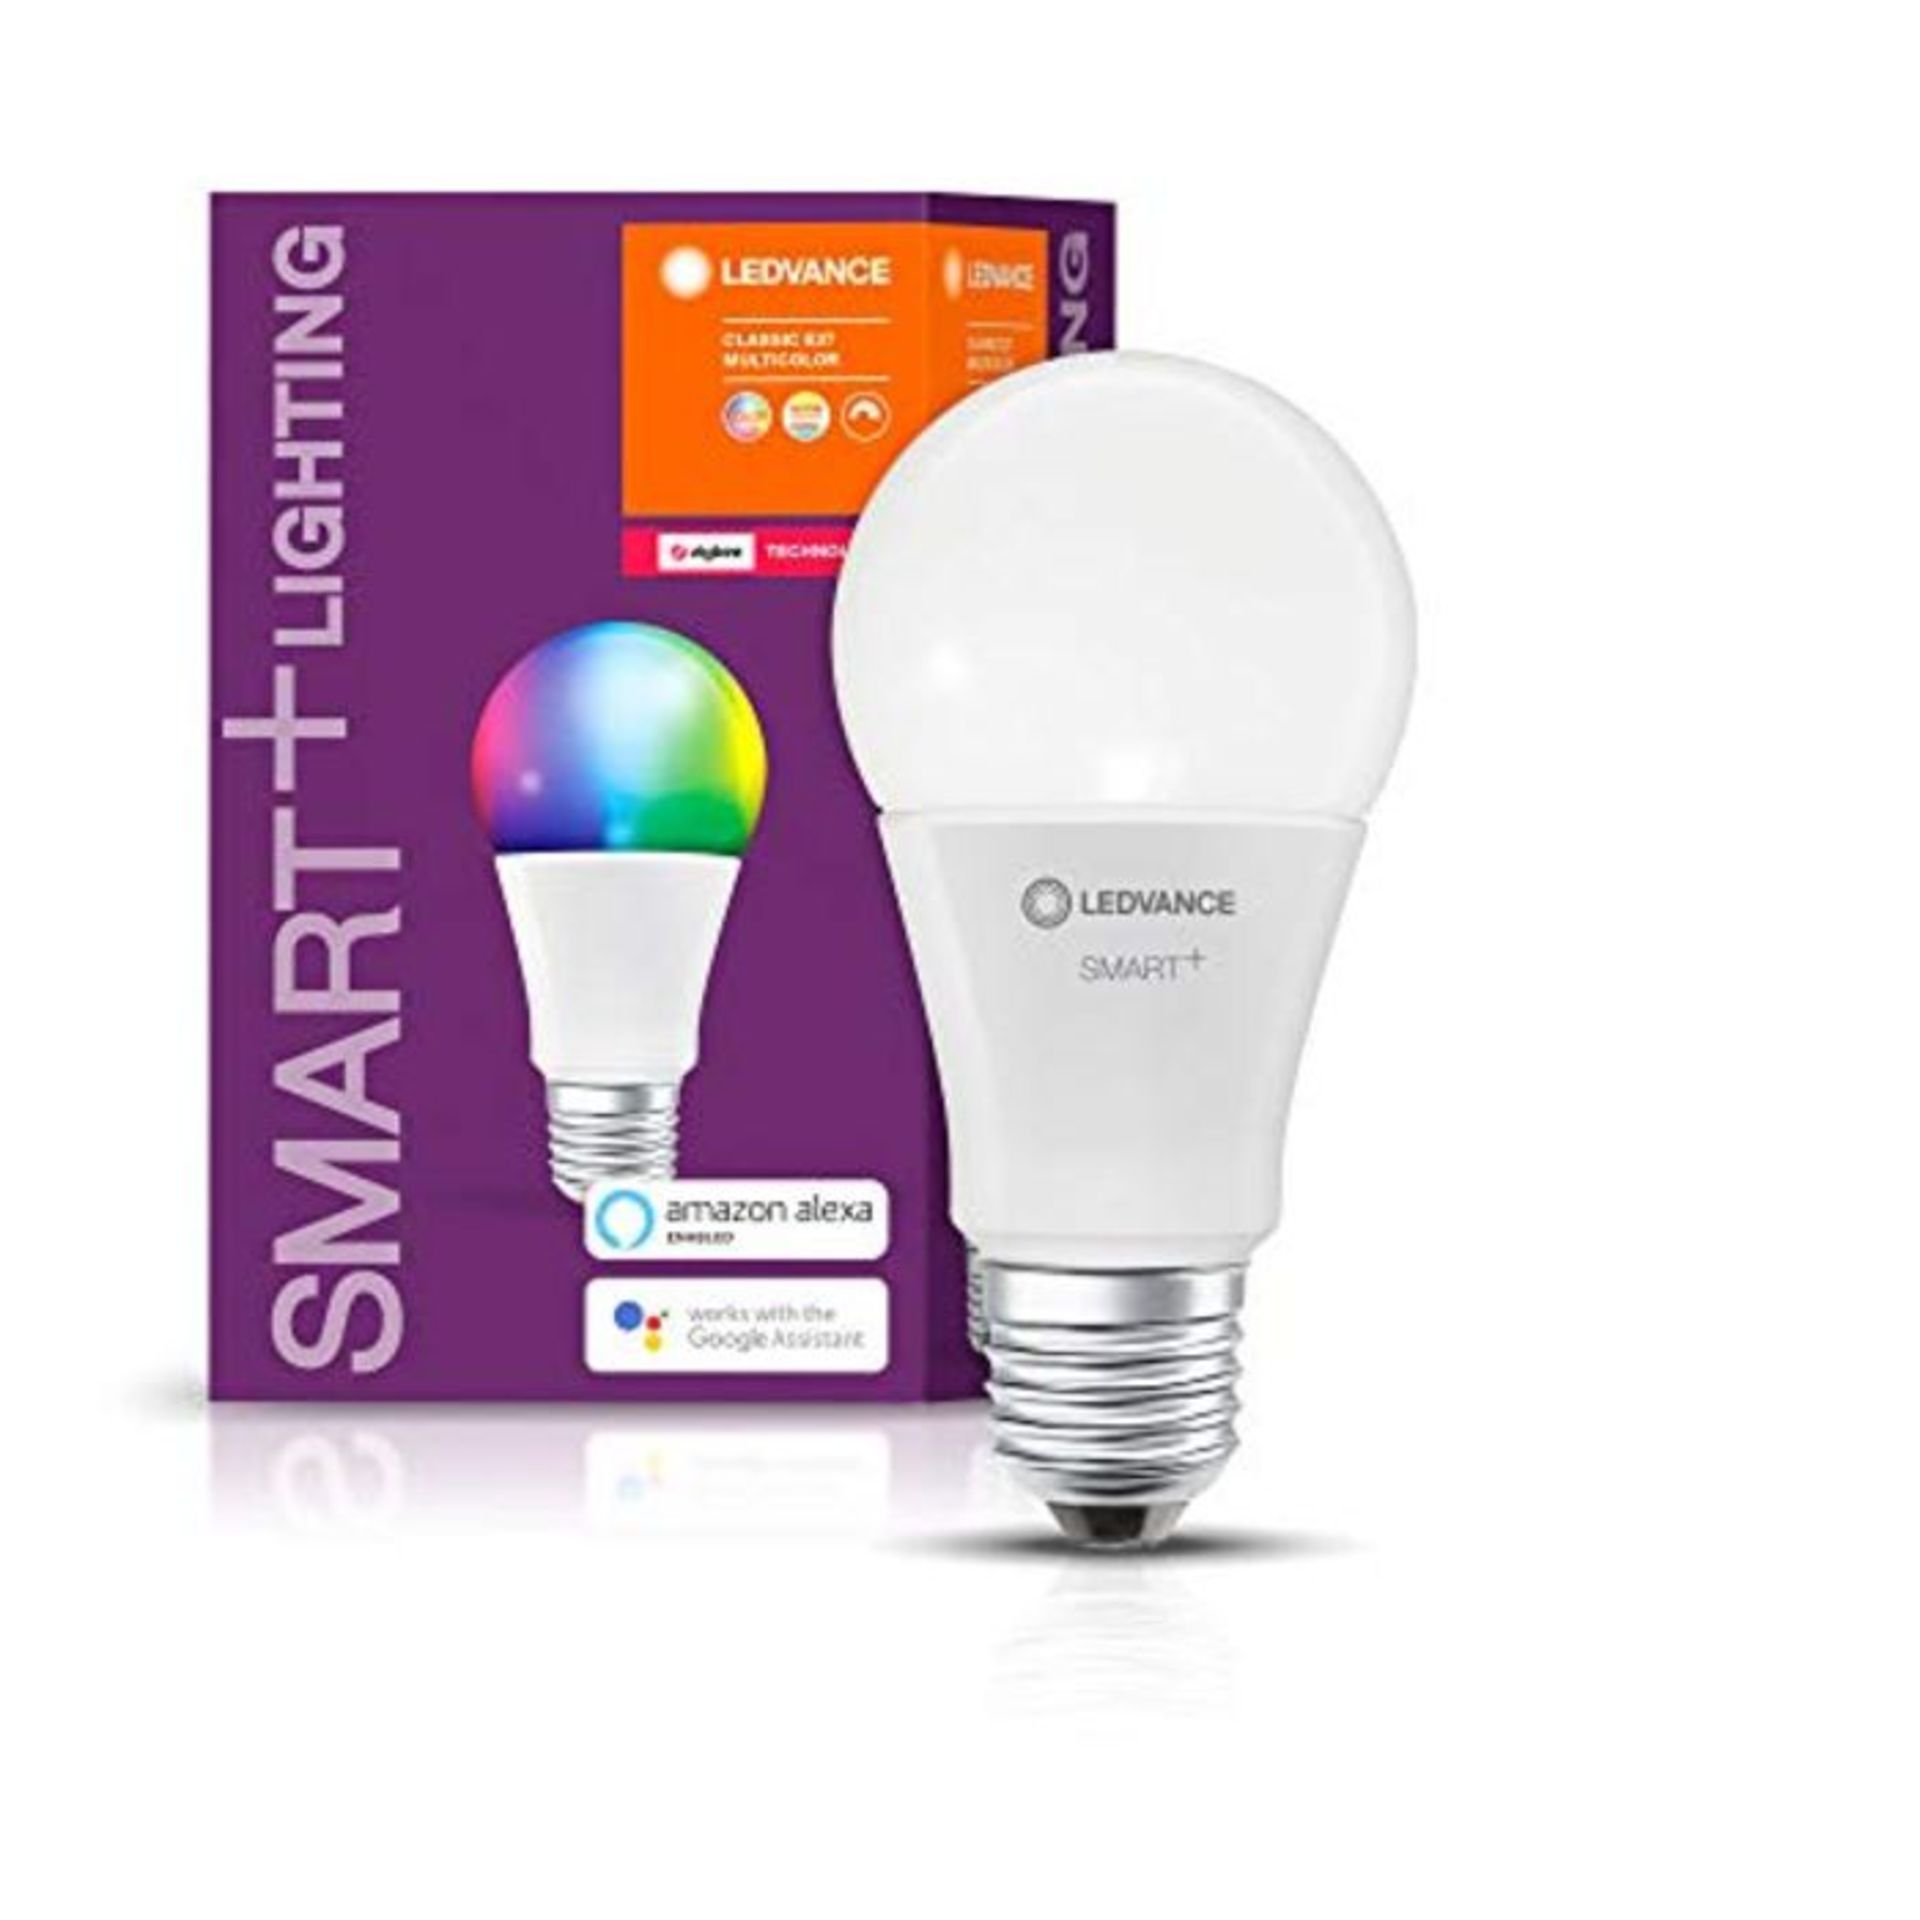 Ledvance Smart Home E27 ZigBee Light Bulb, Rgbw Colour Changing